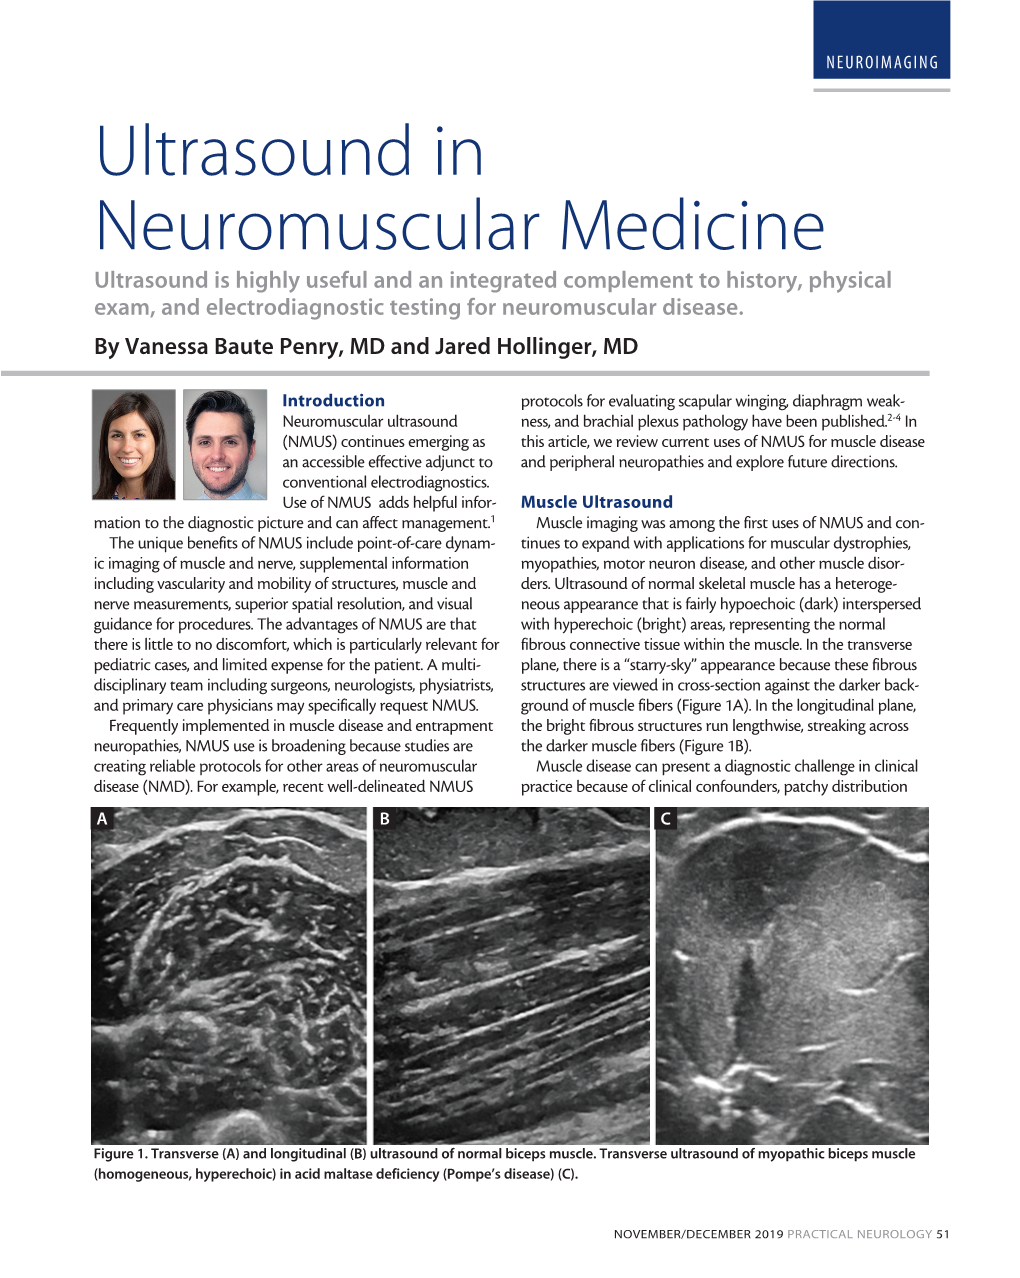 Ultrasound in Neuromuscular Medicine